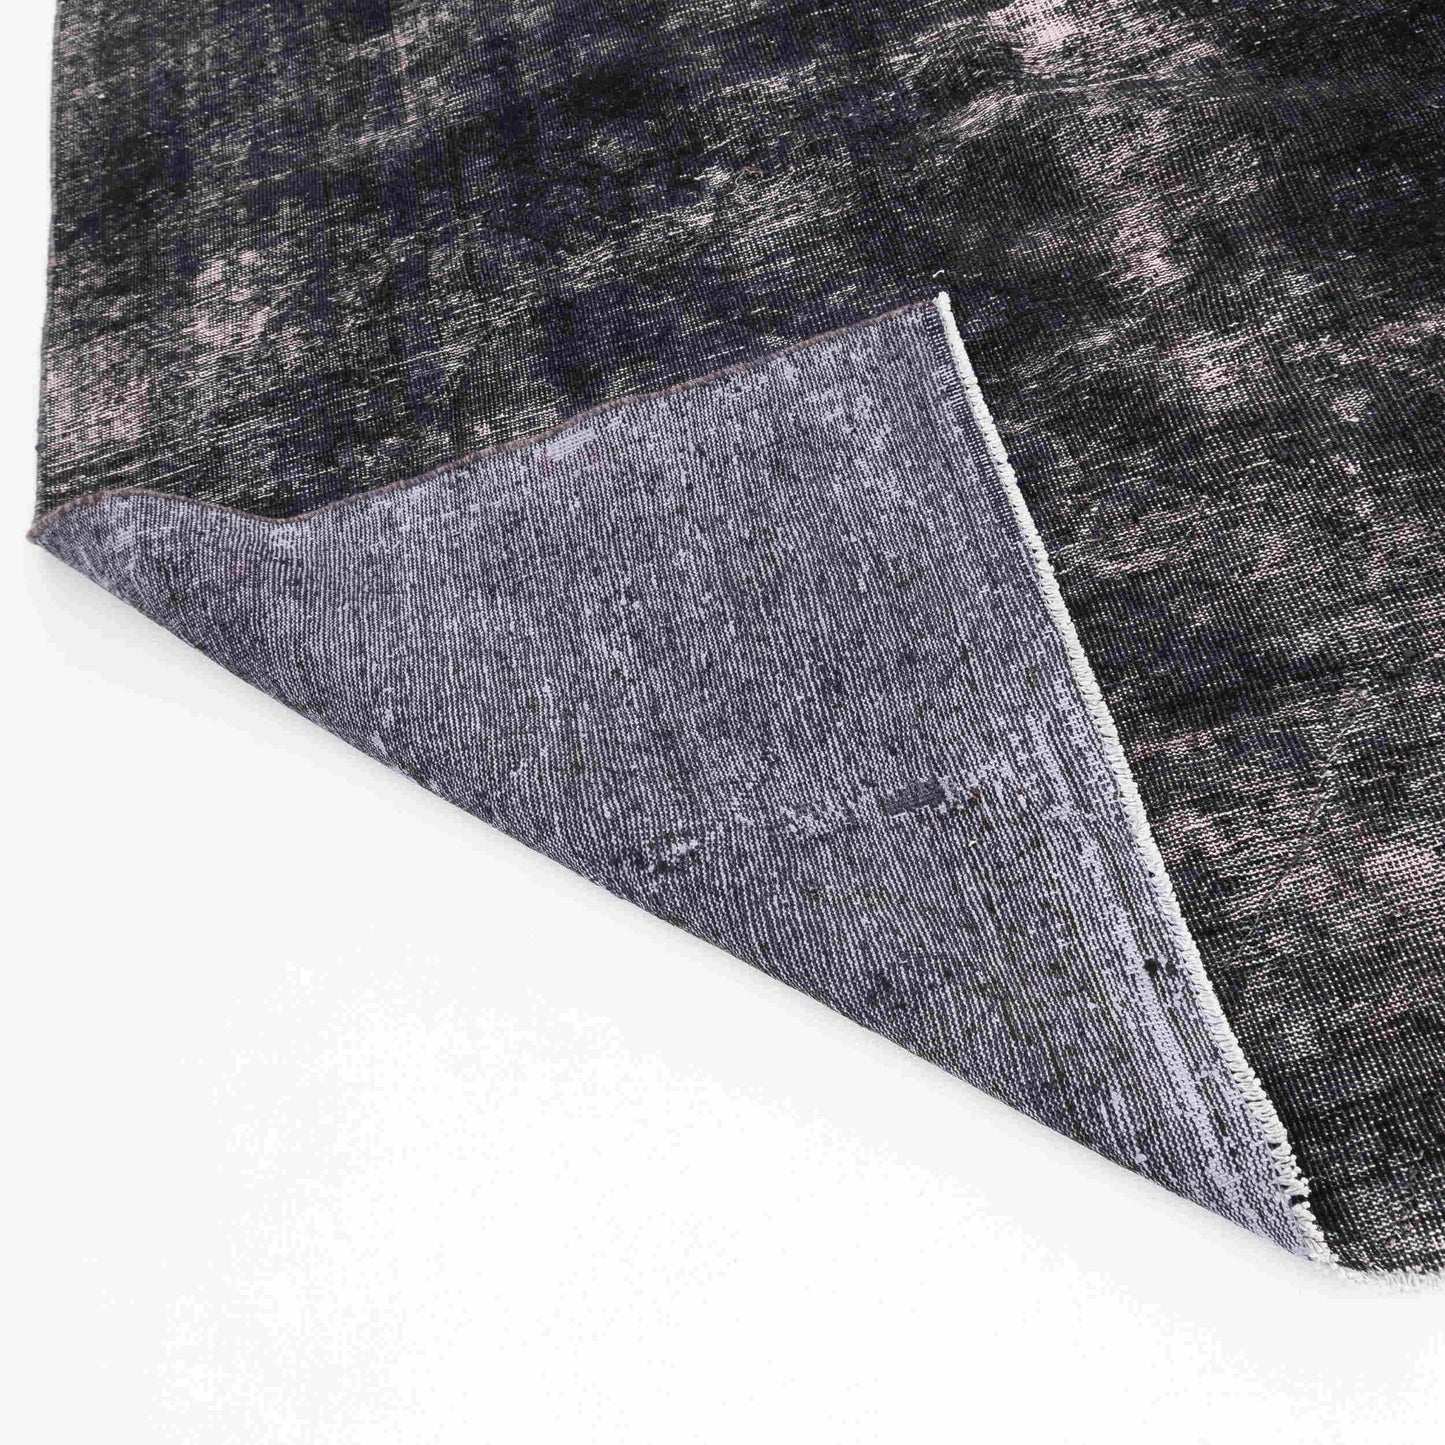 Oriental Rug Vintage Hand Knotted Wool On Cotton 283 x 377 Cm - 9' 4'' x 12' 5'' Black C002 ER34